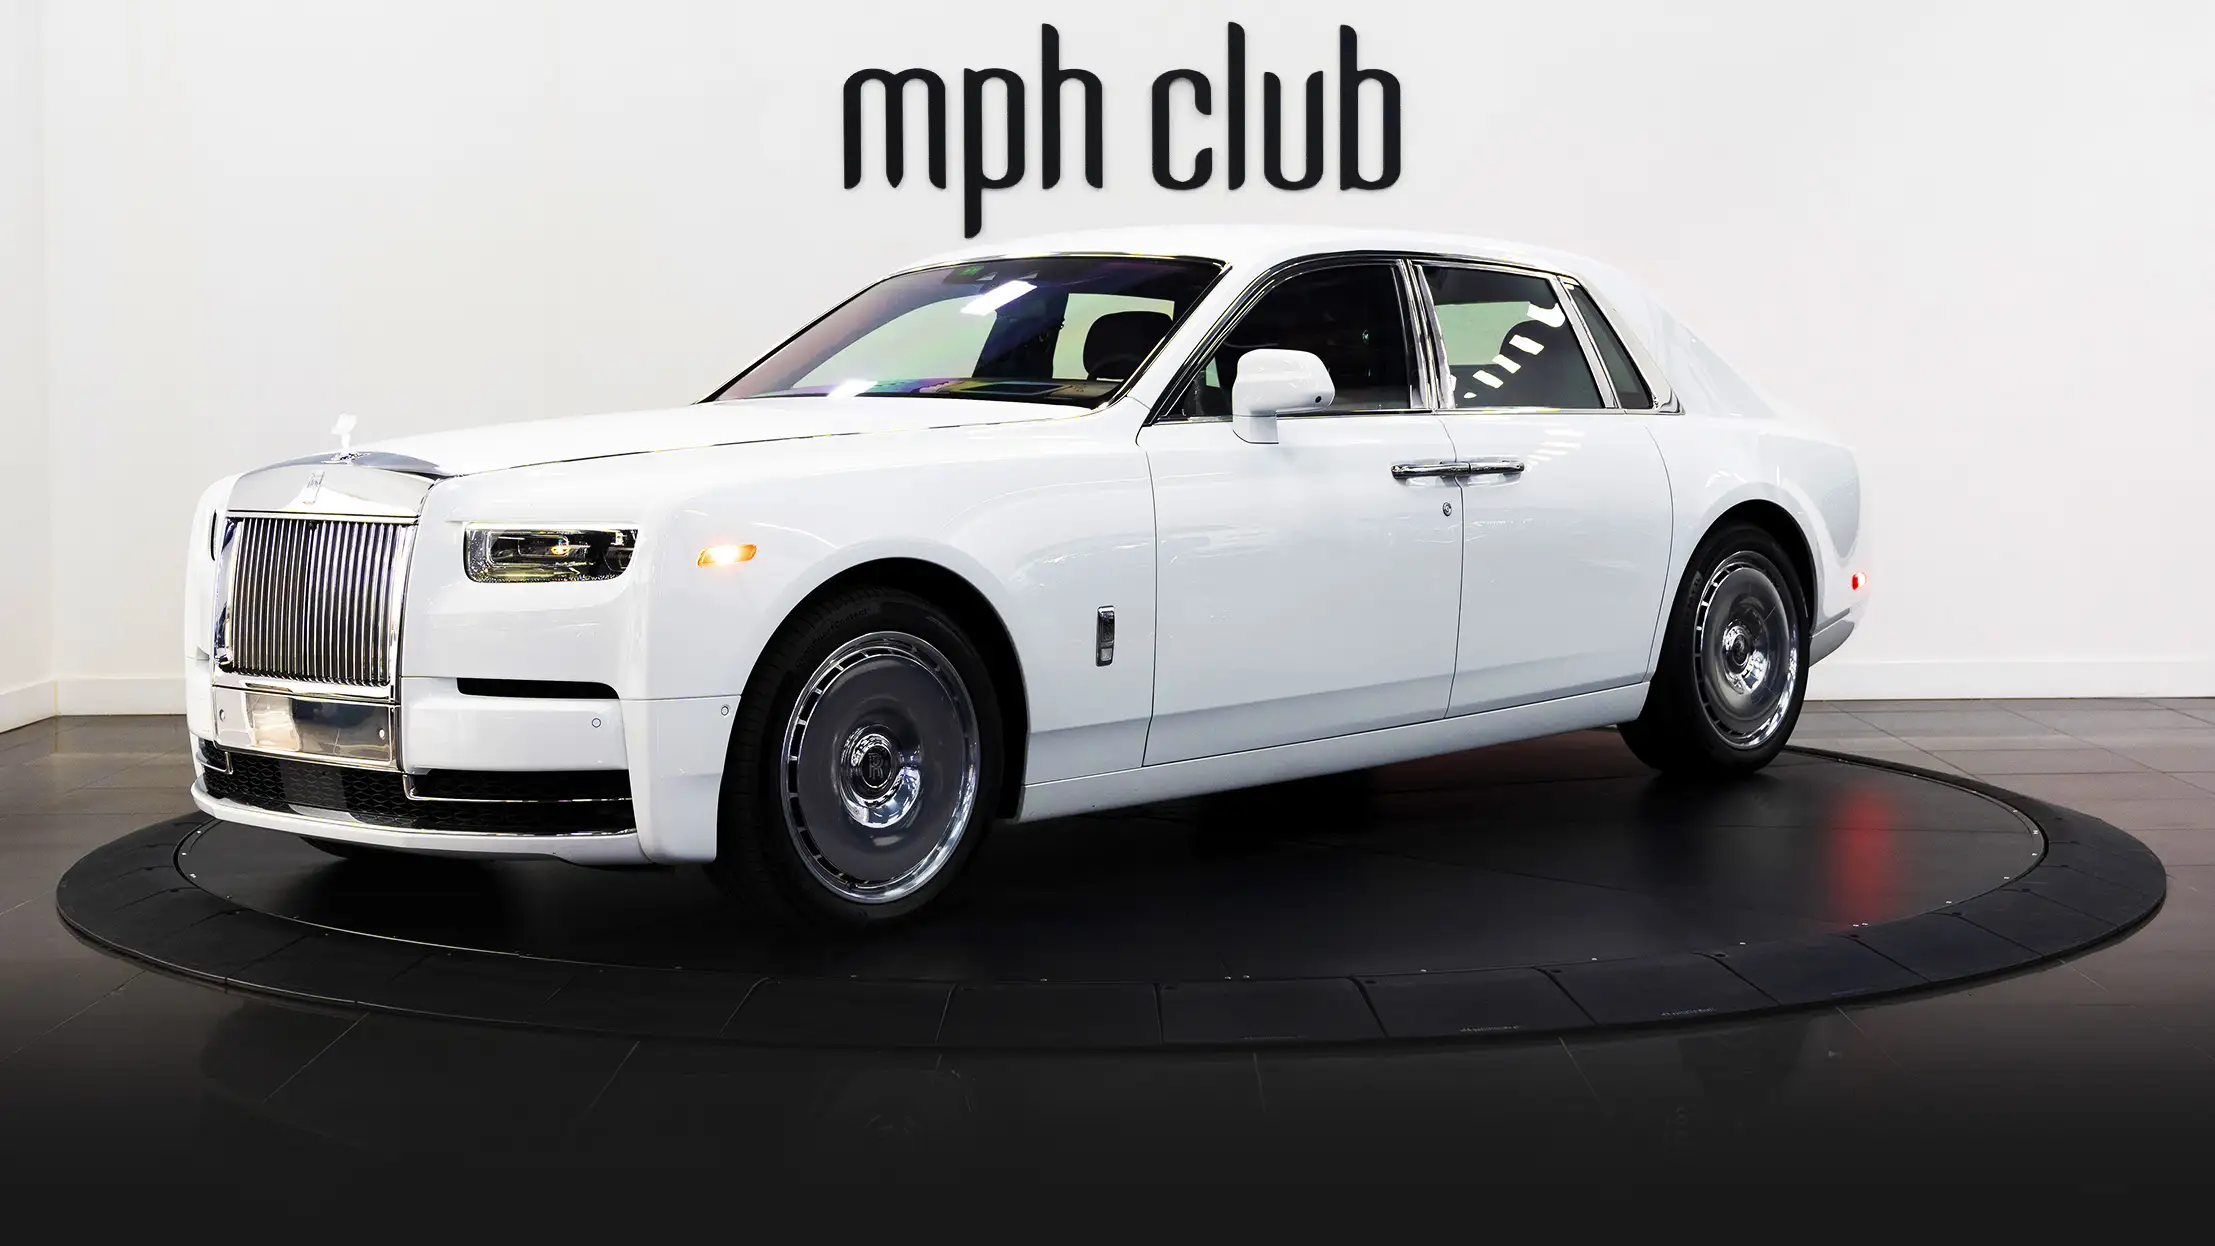 White Rolls Royce Phantom rental profile view - mph club 2